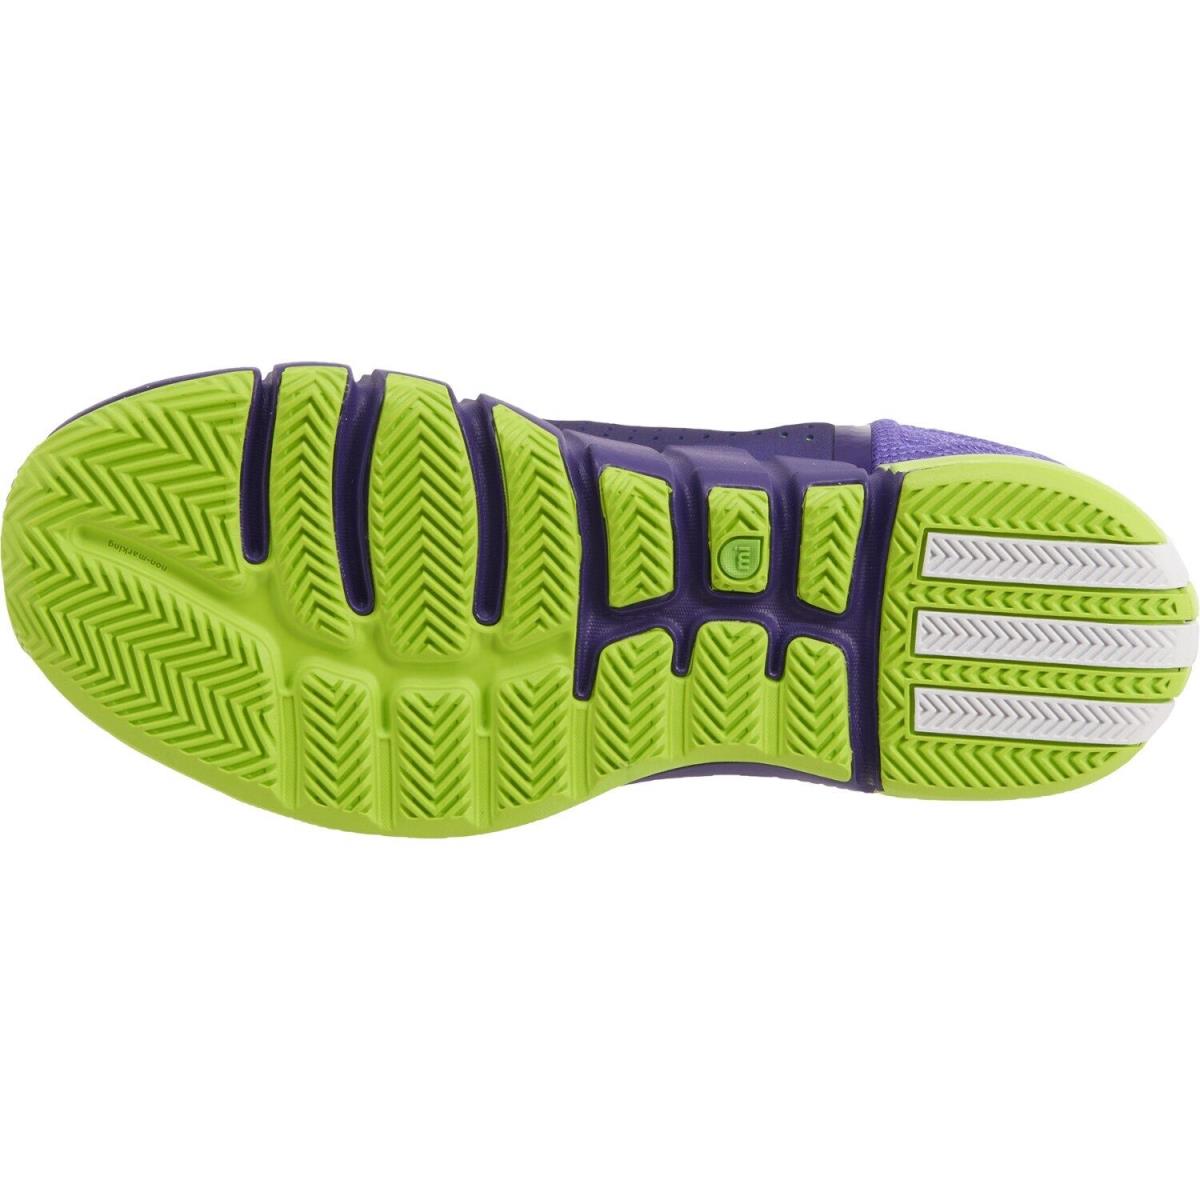 Adidas shoes Rose Restomod - Purple 4